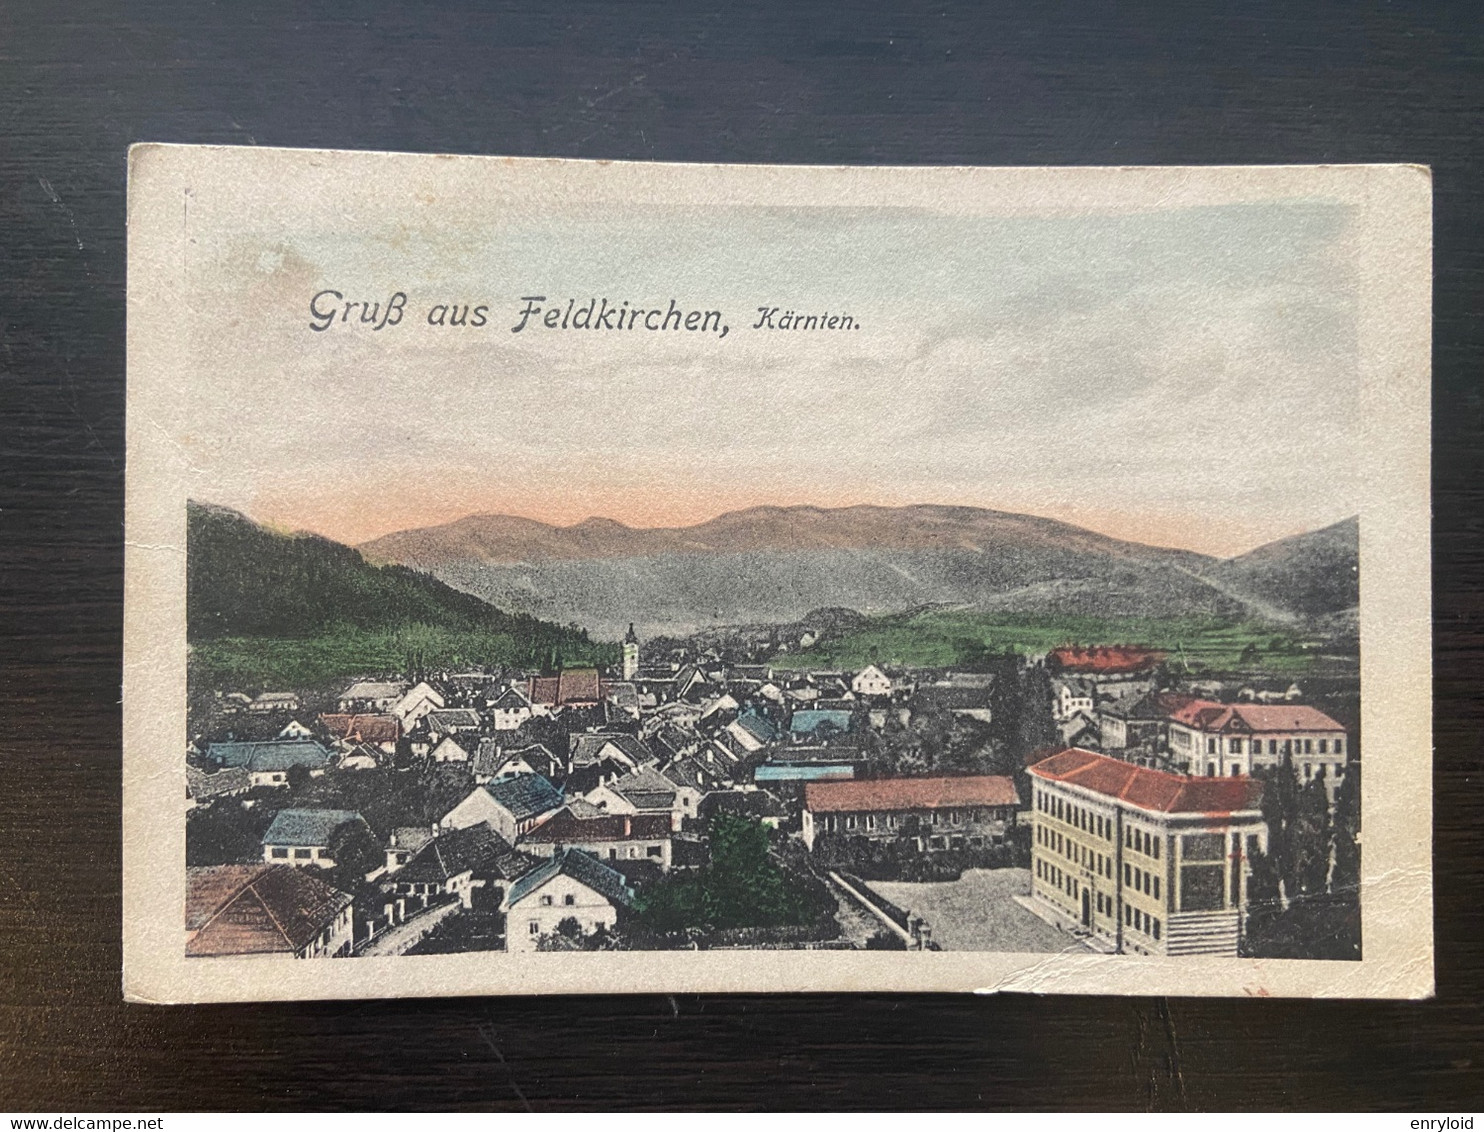 Gruß Aus Feldkirchen, Rarien. 1919 - Feldkirchen In Kärnten